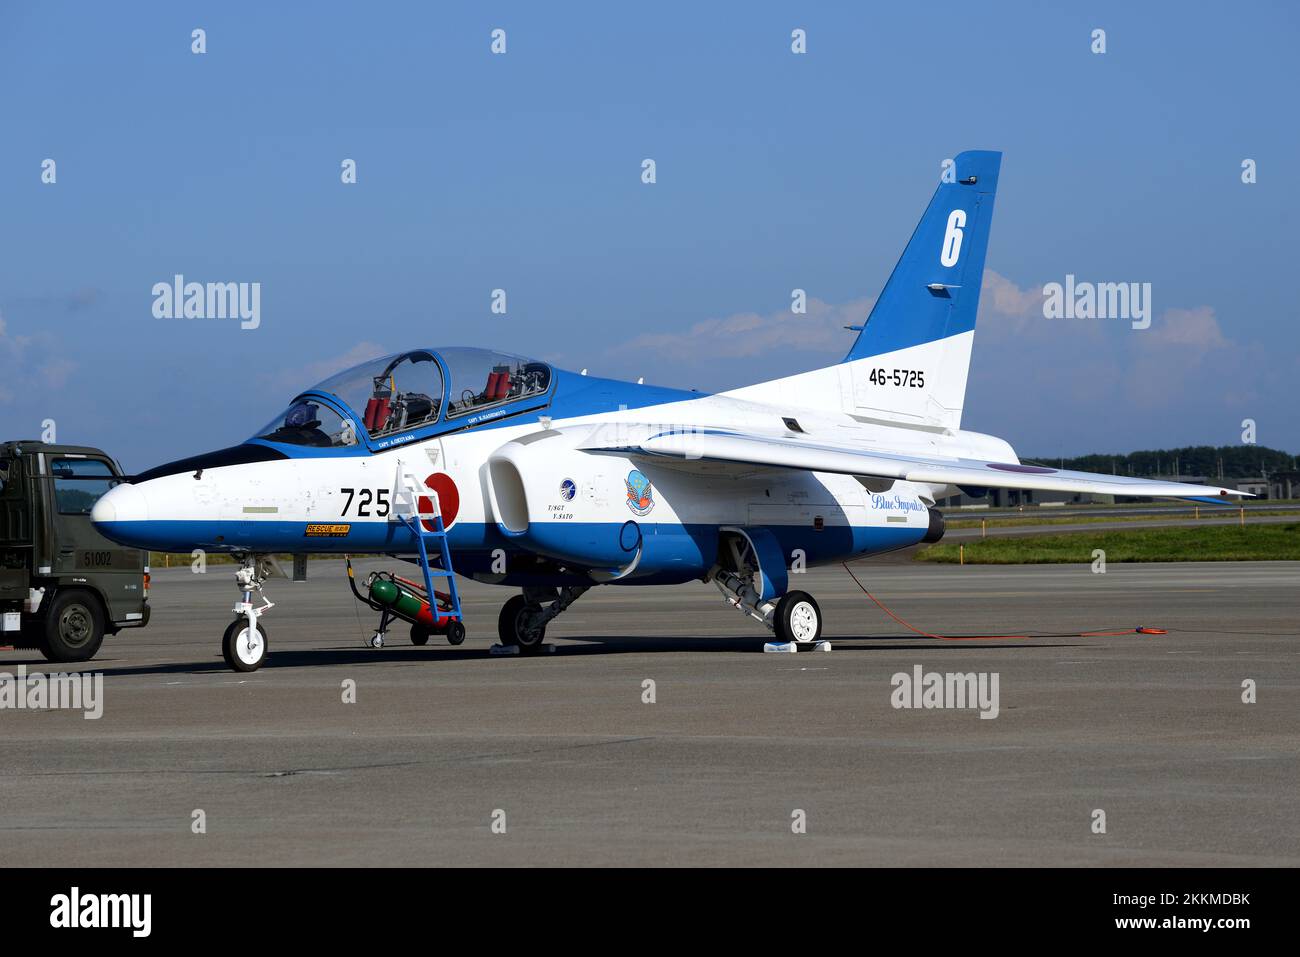 Präfektur Aomori, Japan - 07. September 2014: Japan Air Self-Defense Force T-4 Trainingsflugzeug vom Blue Impulse Aerobatic Demonstrationsteam. Stockfoto